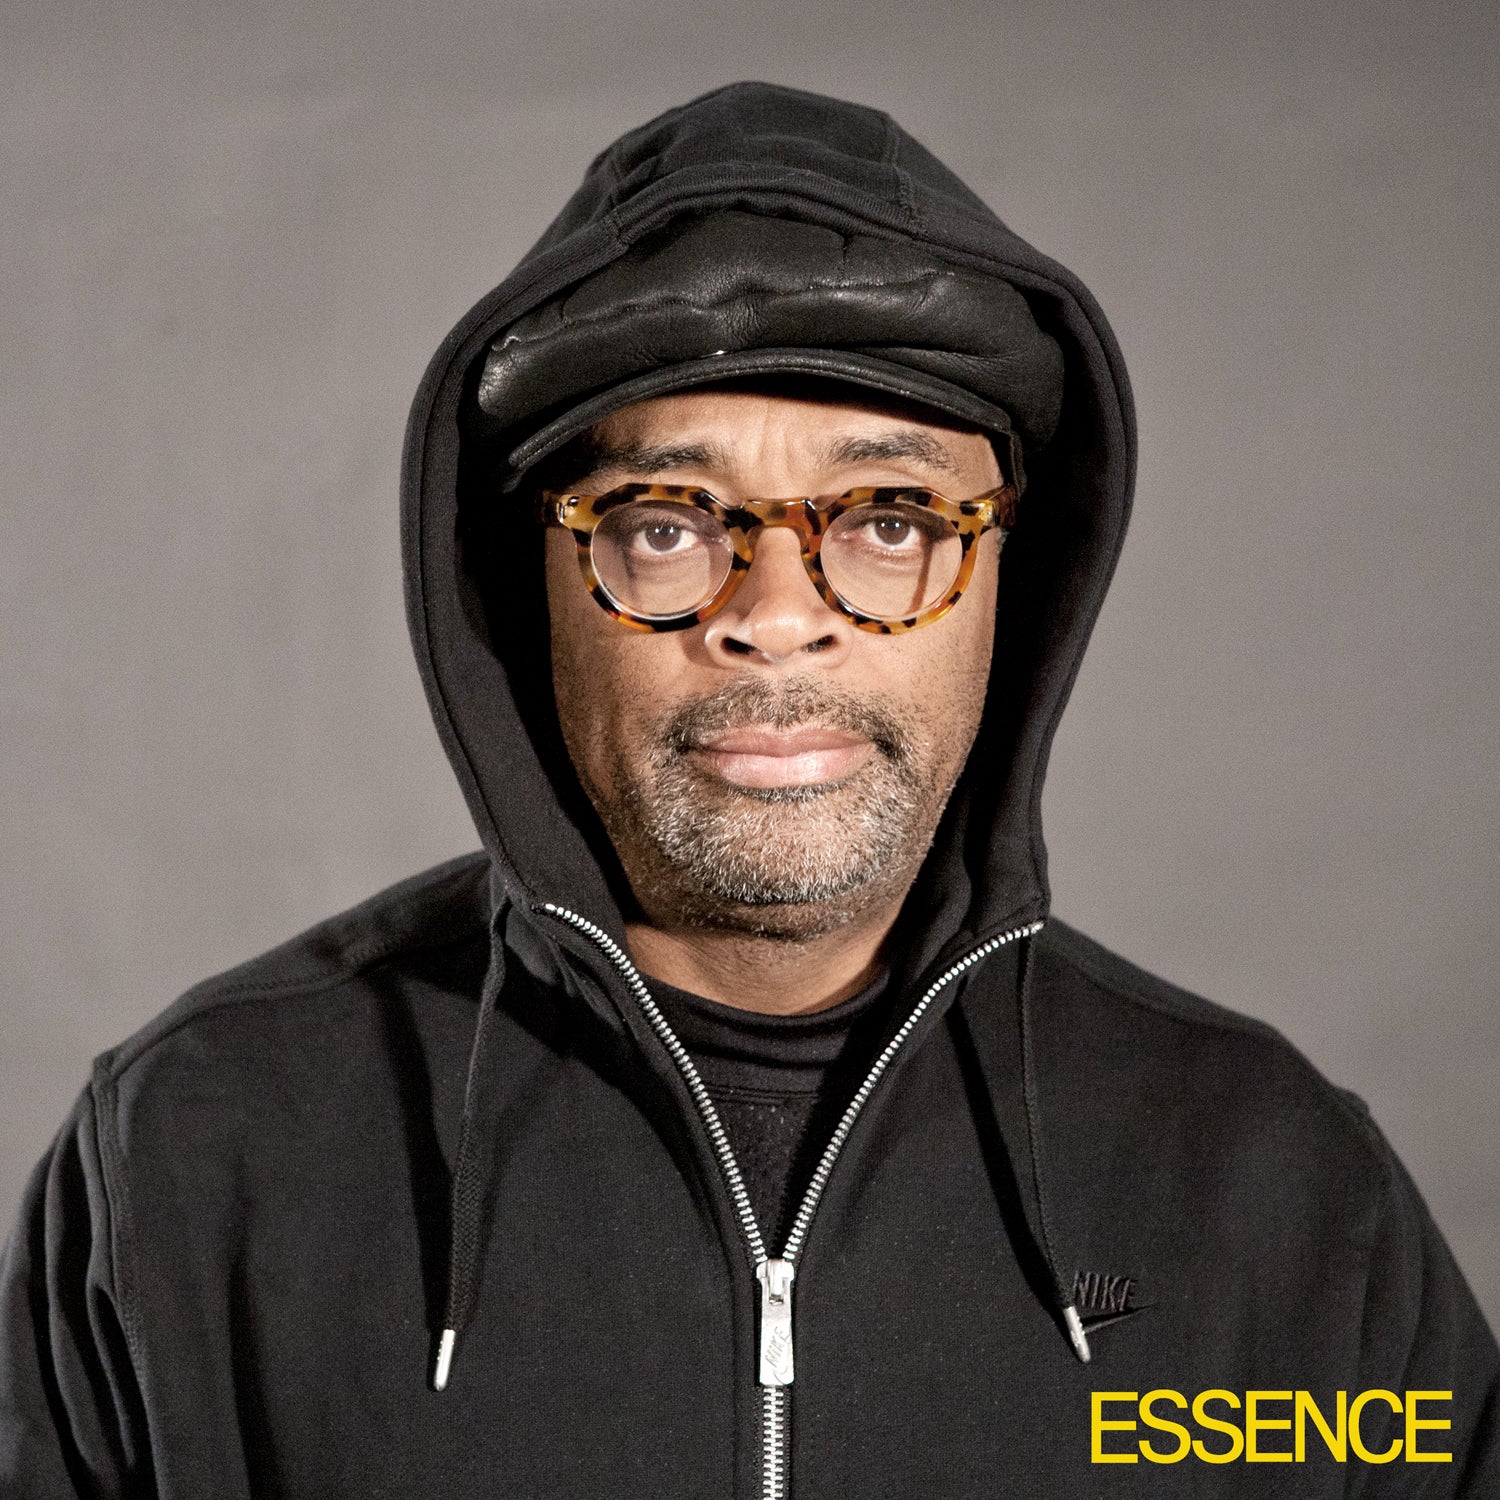 ESSENCE.com's Exclusive Celebrity Portraits of 2013